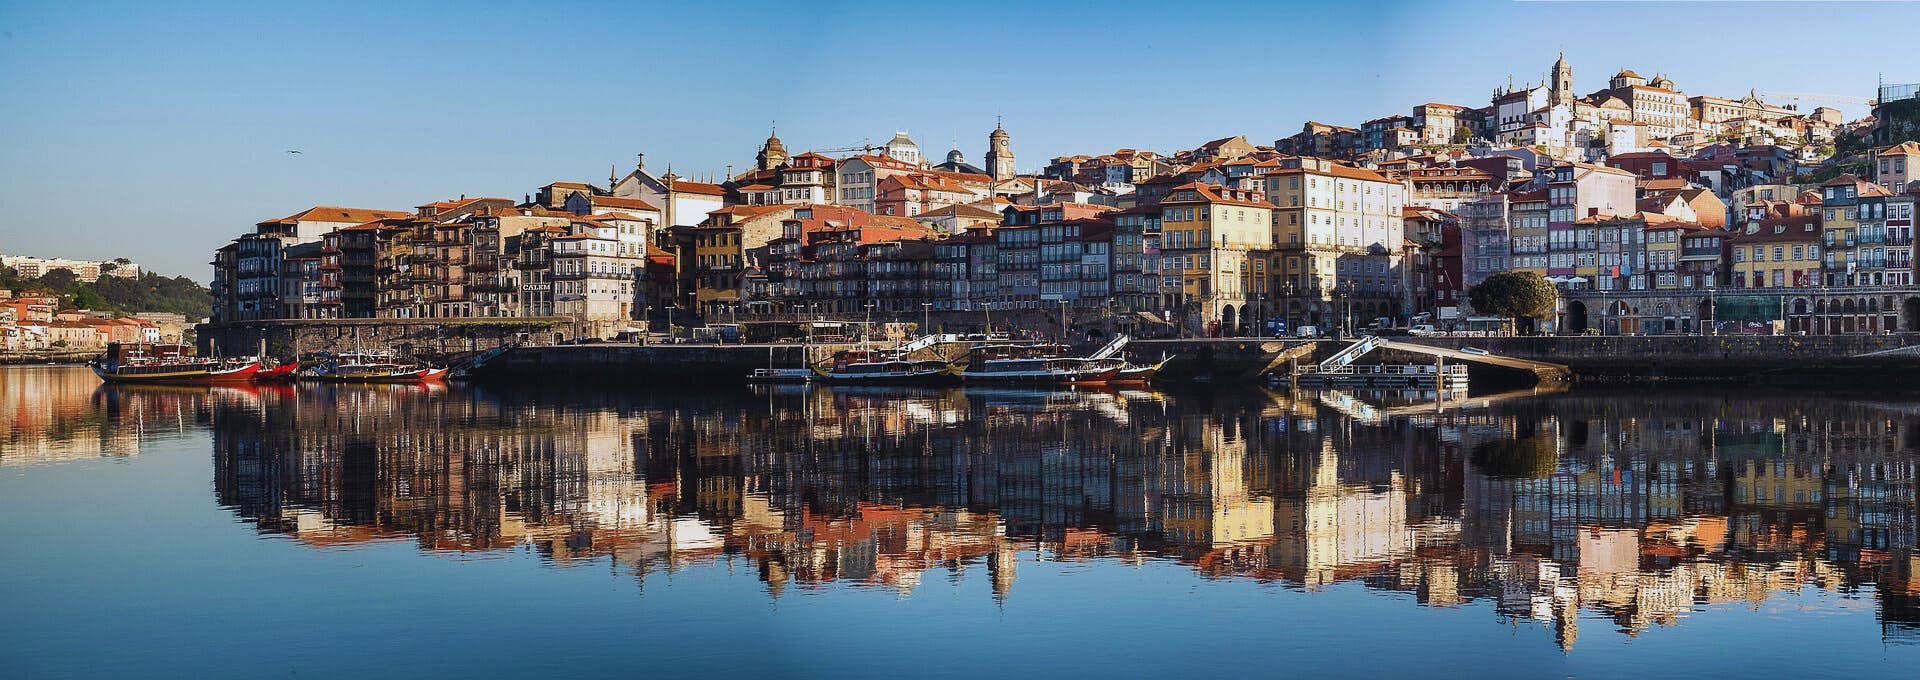 Porto image